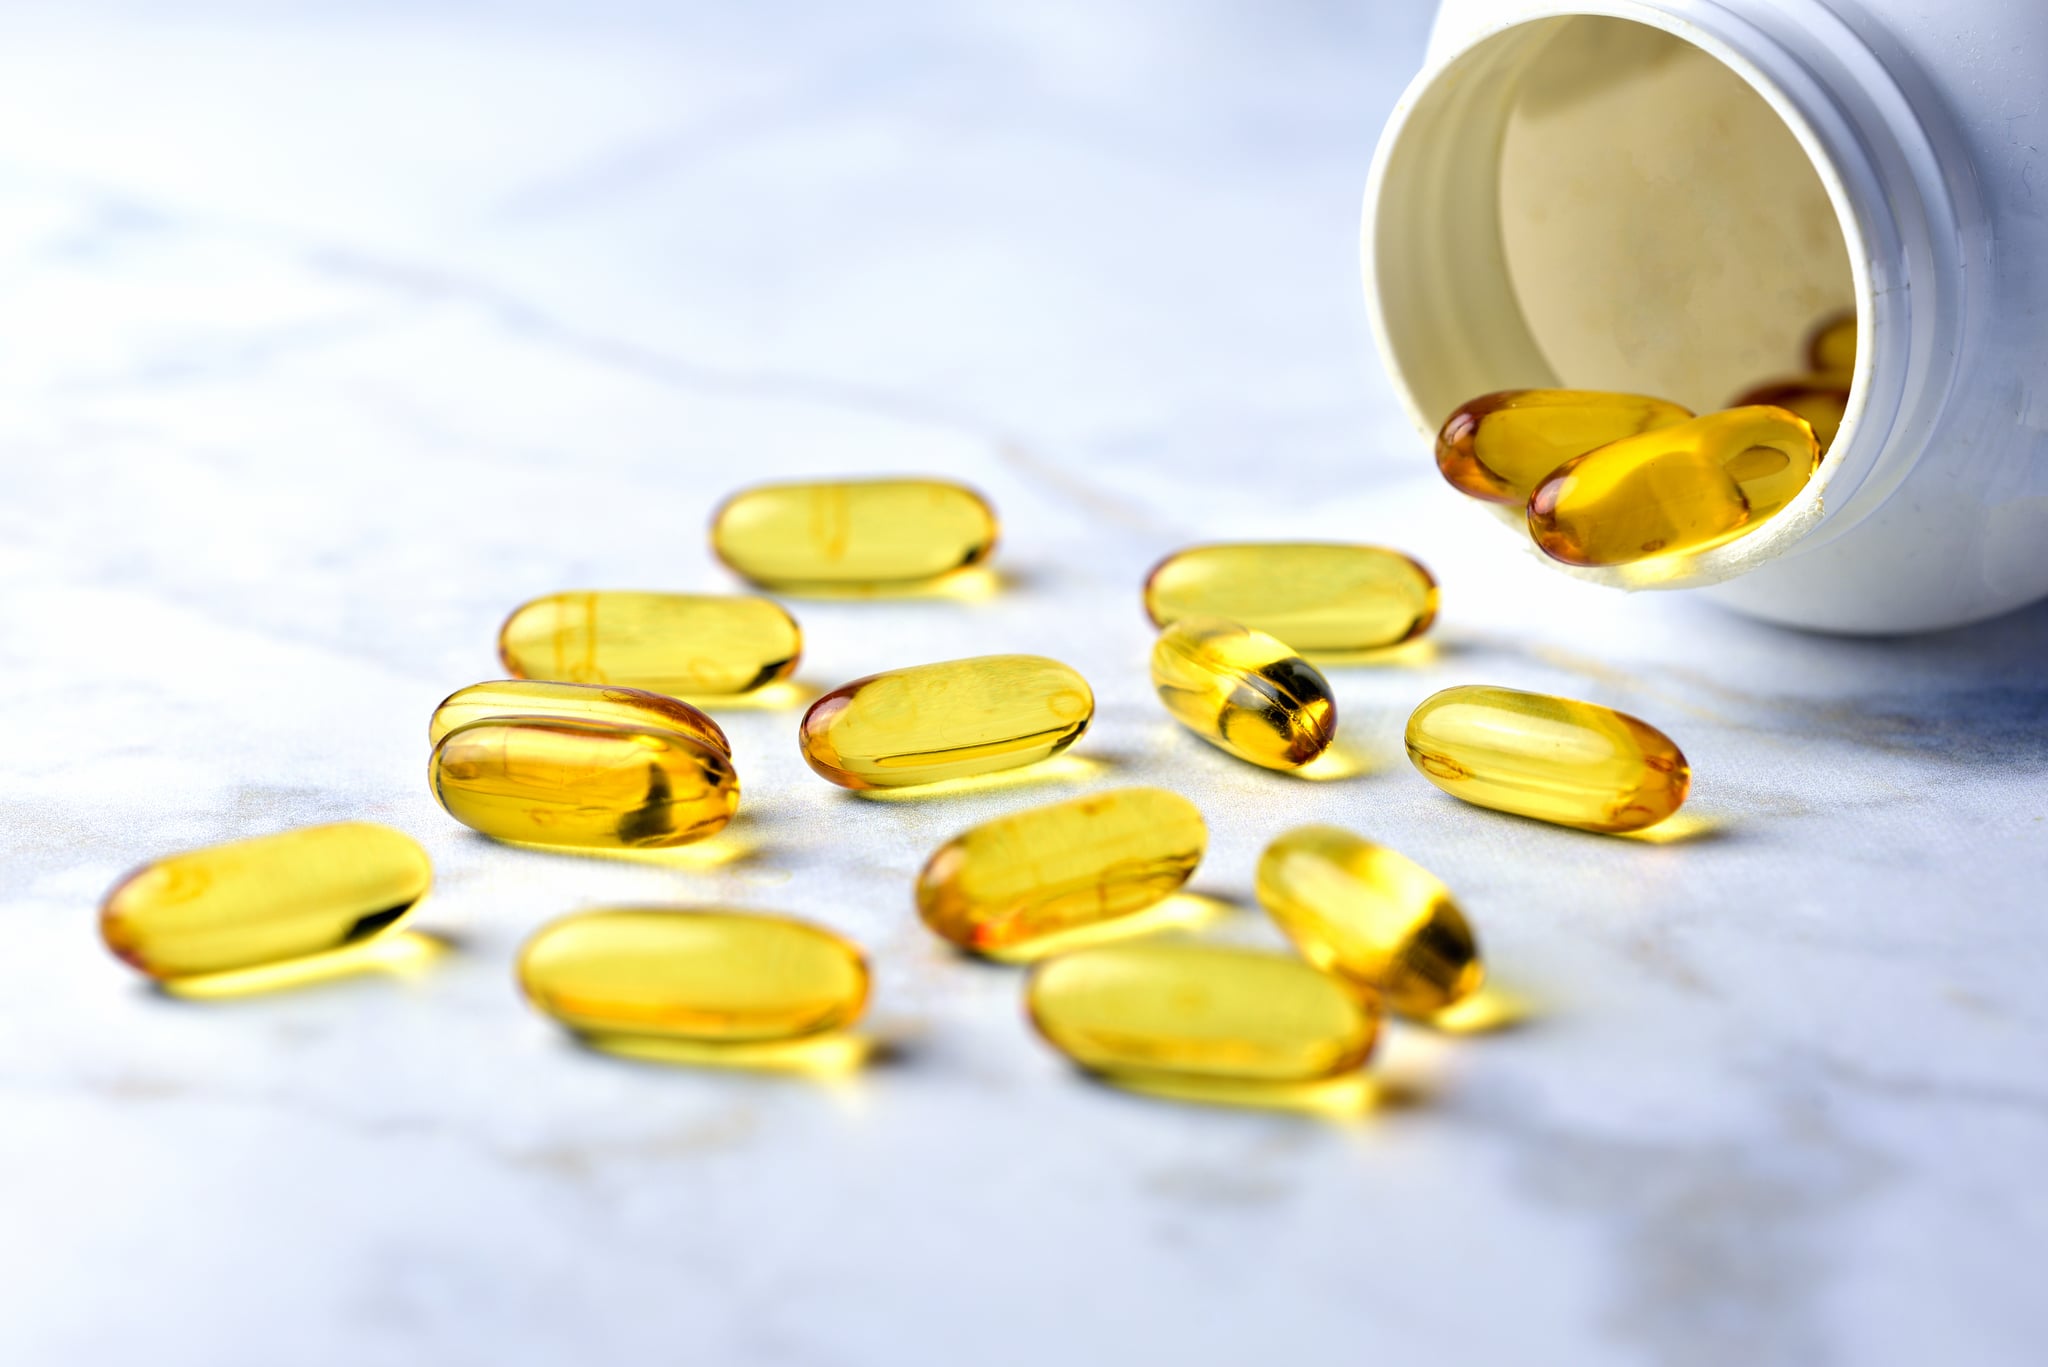 Bottle of yellow fish oil pills on table